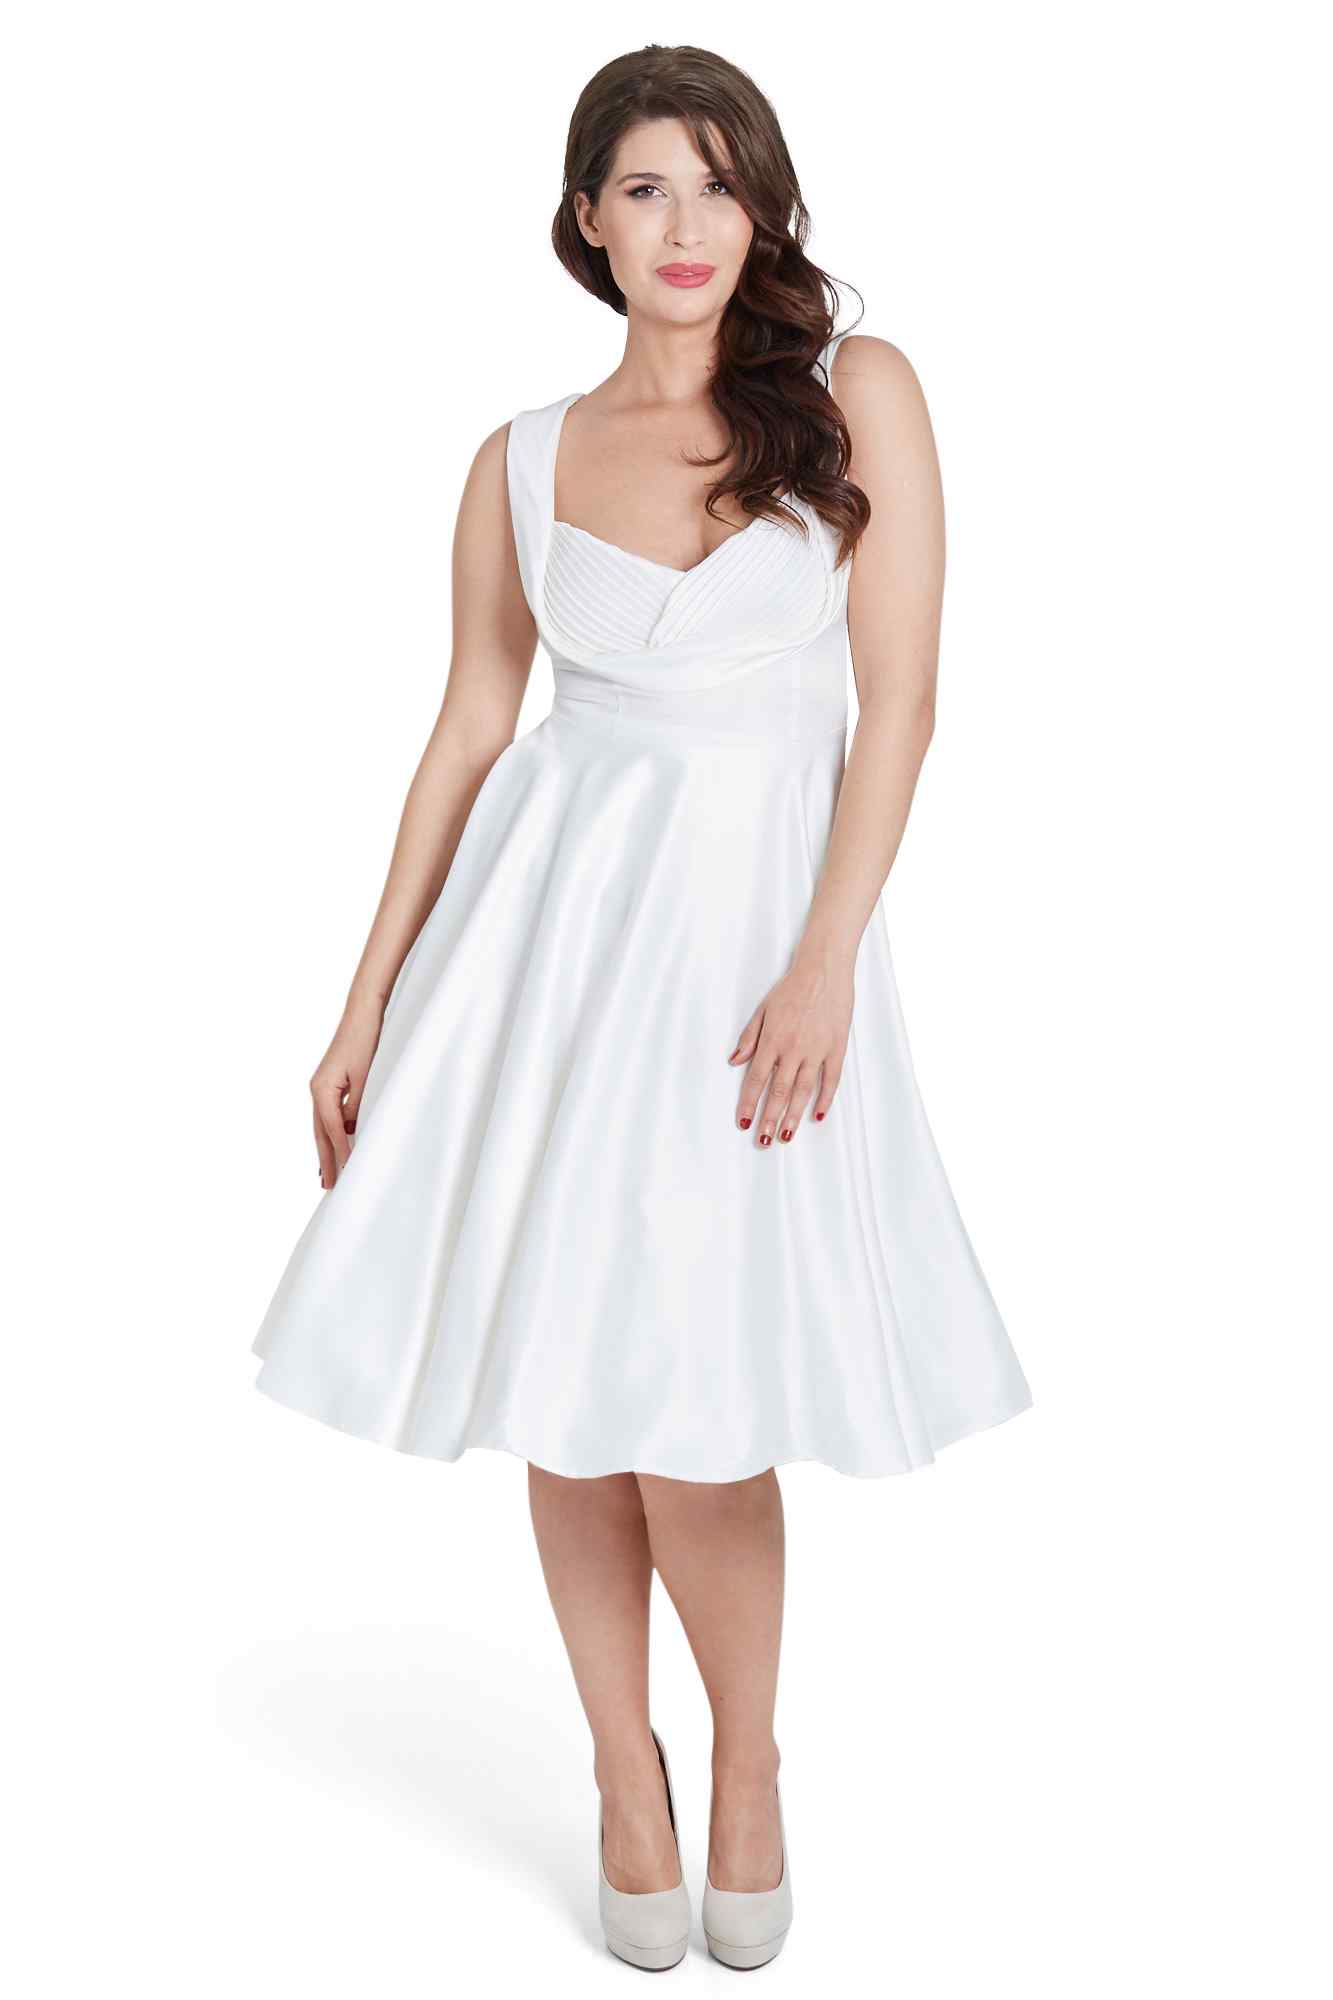 Vintage Style Jive Dress in White